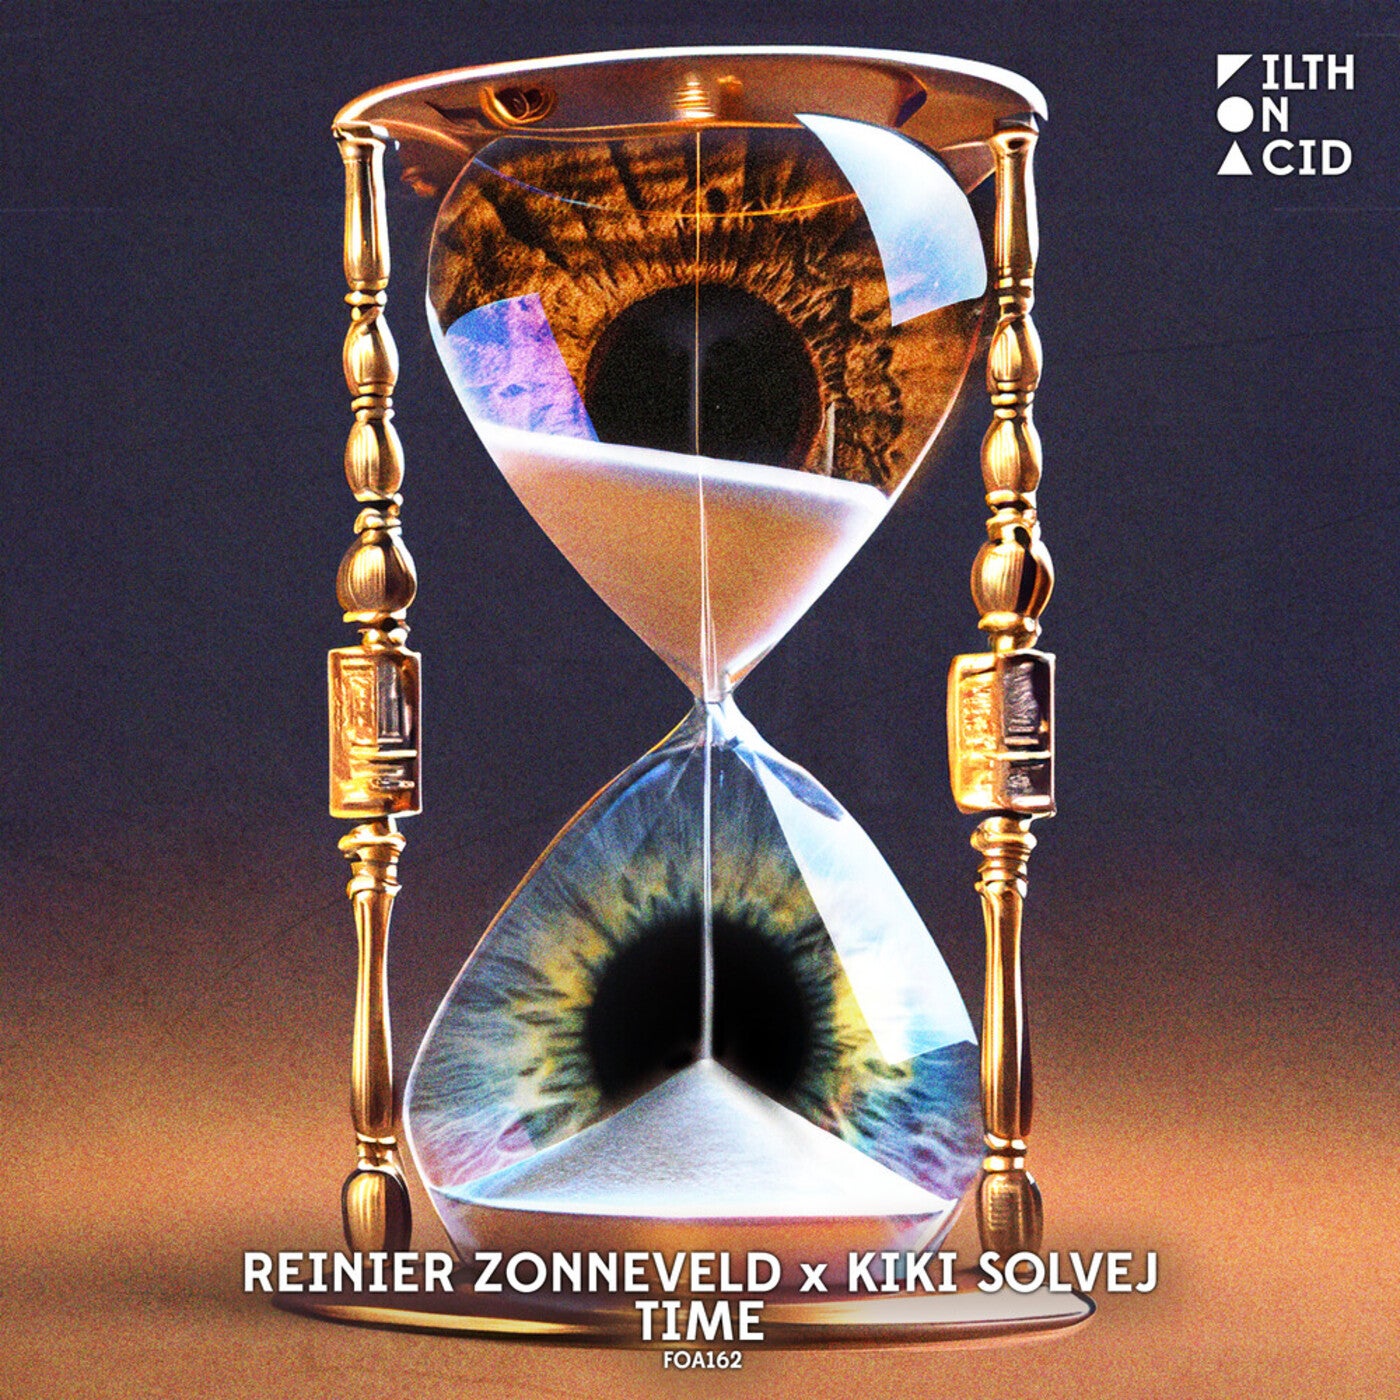 image cover: Reinier Zonneveld, Kiki Solvej - Time on Filth on Acid